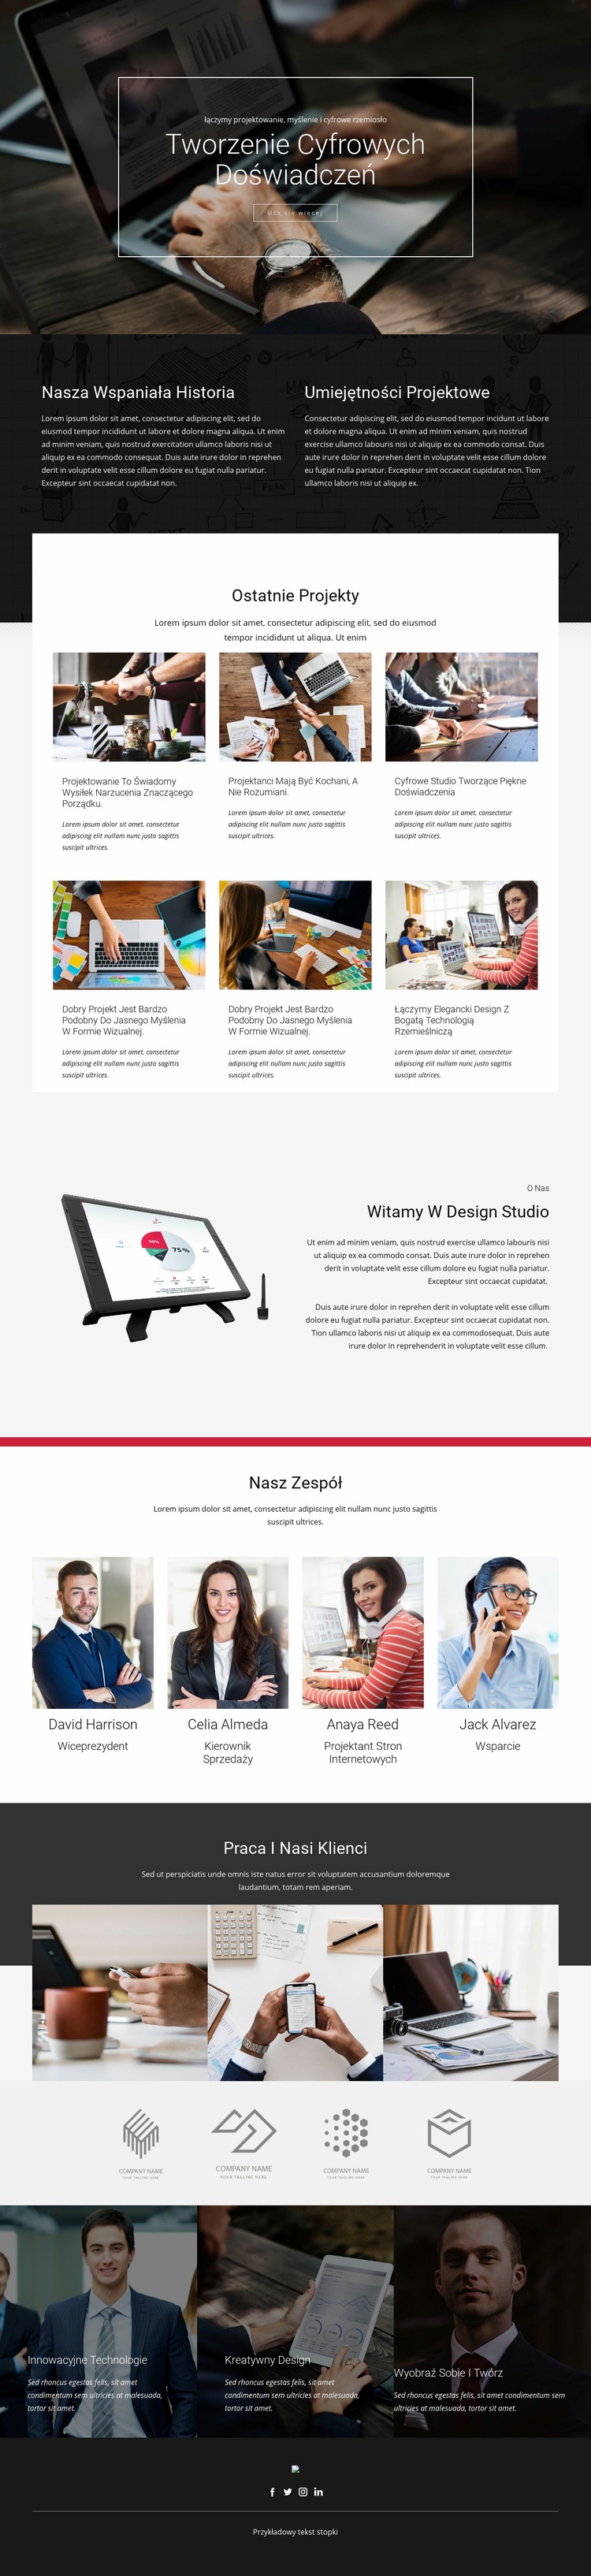 Crafting Digital Design Studio Makieta strony internetowej